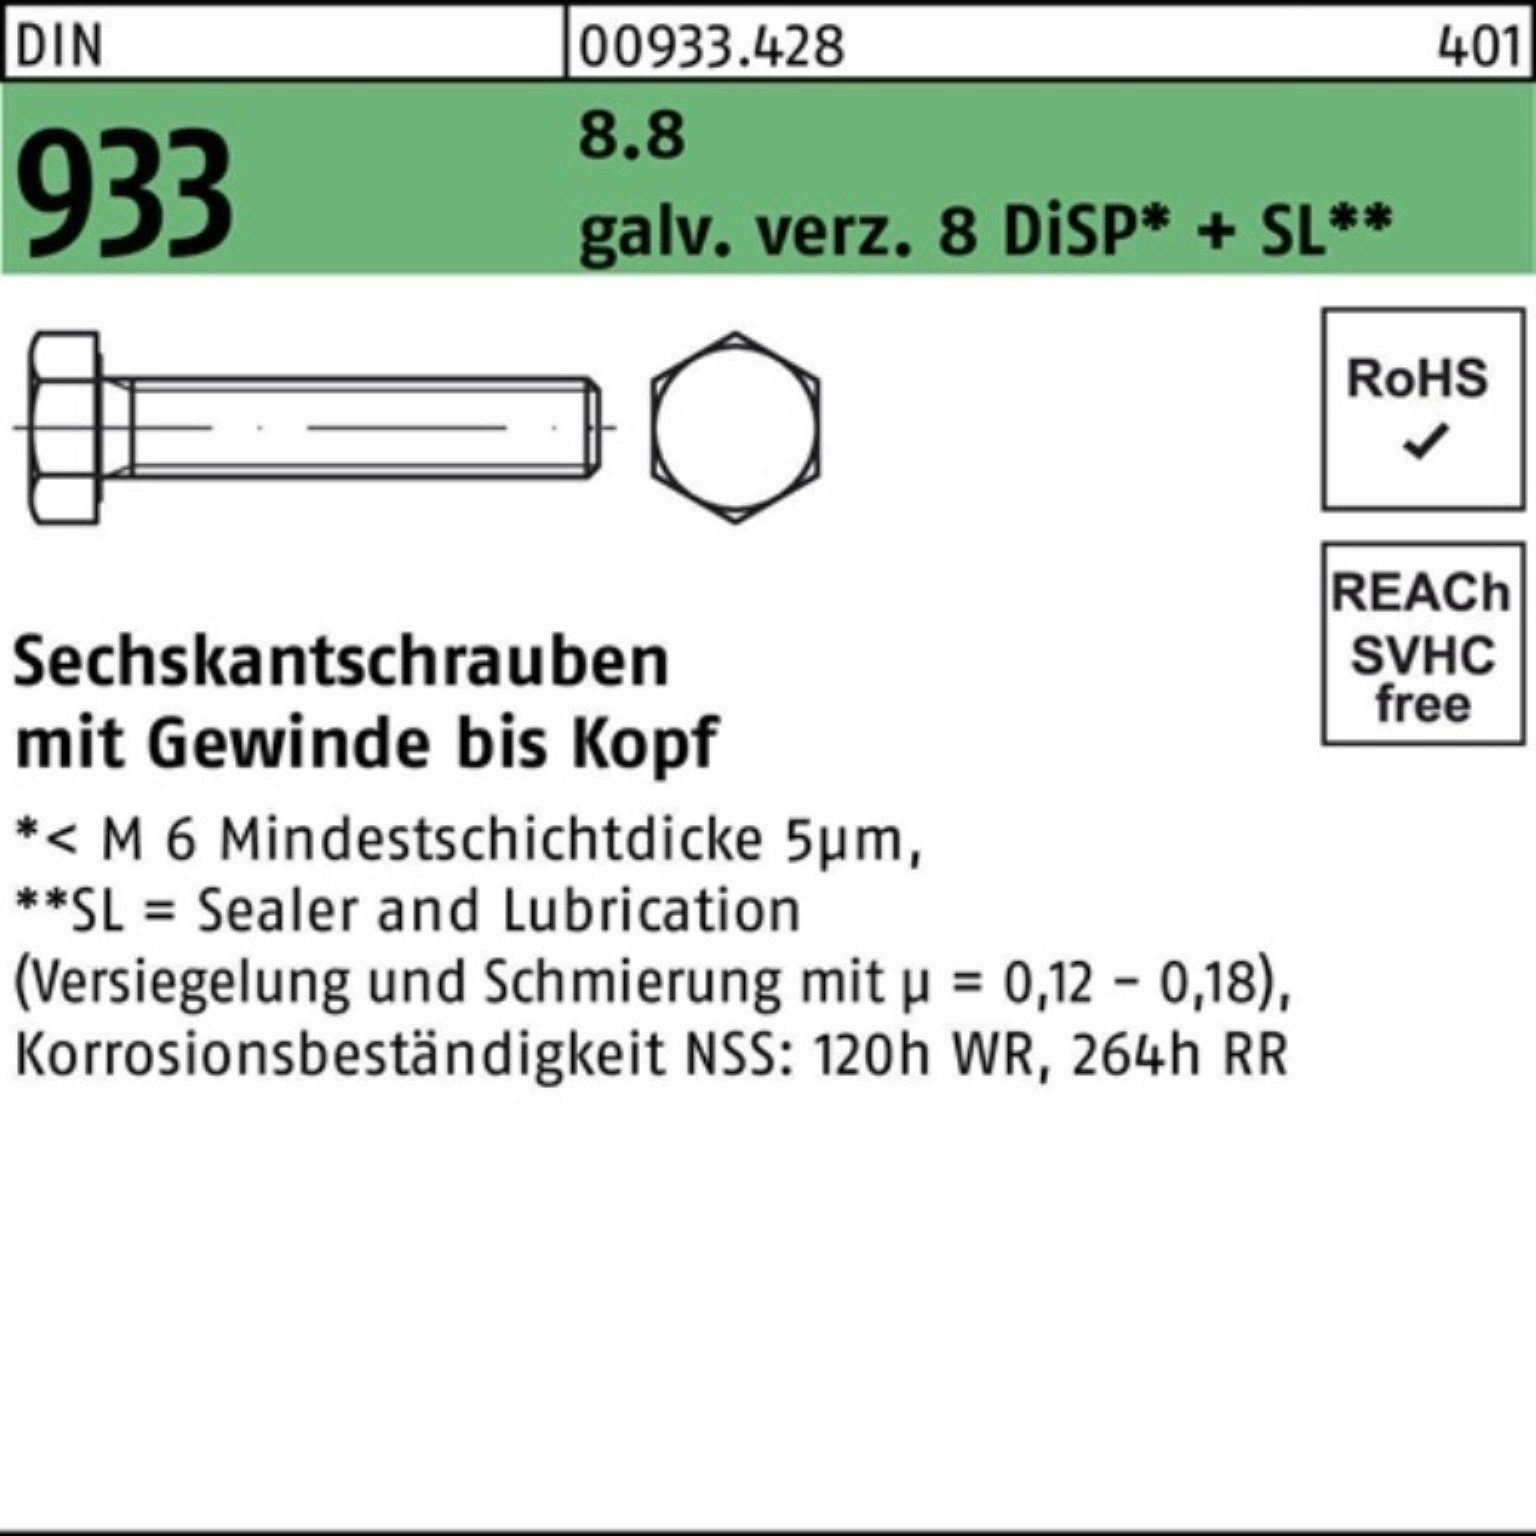 DiSP + 8 100er 8.8 gal Sechskantschraube Zn Reyher VG 45 Pack SL M20x 933 DIN Sechskantschraube